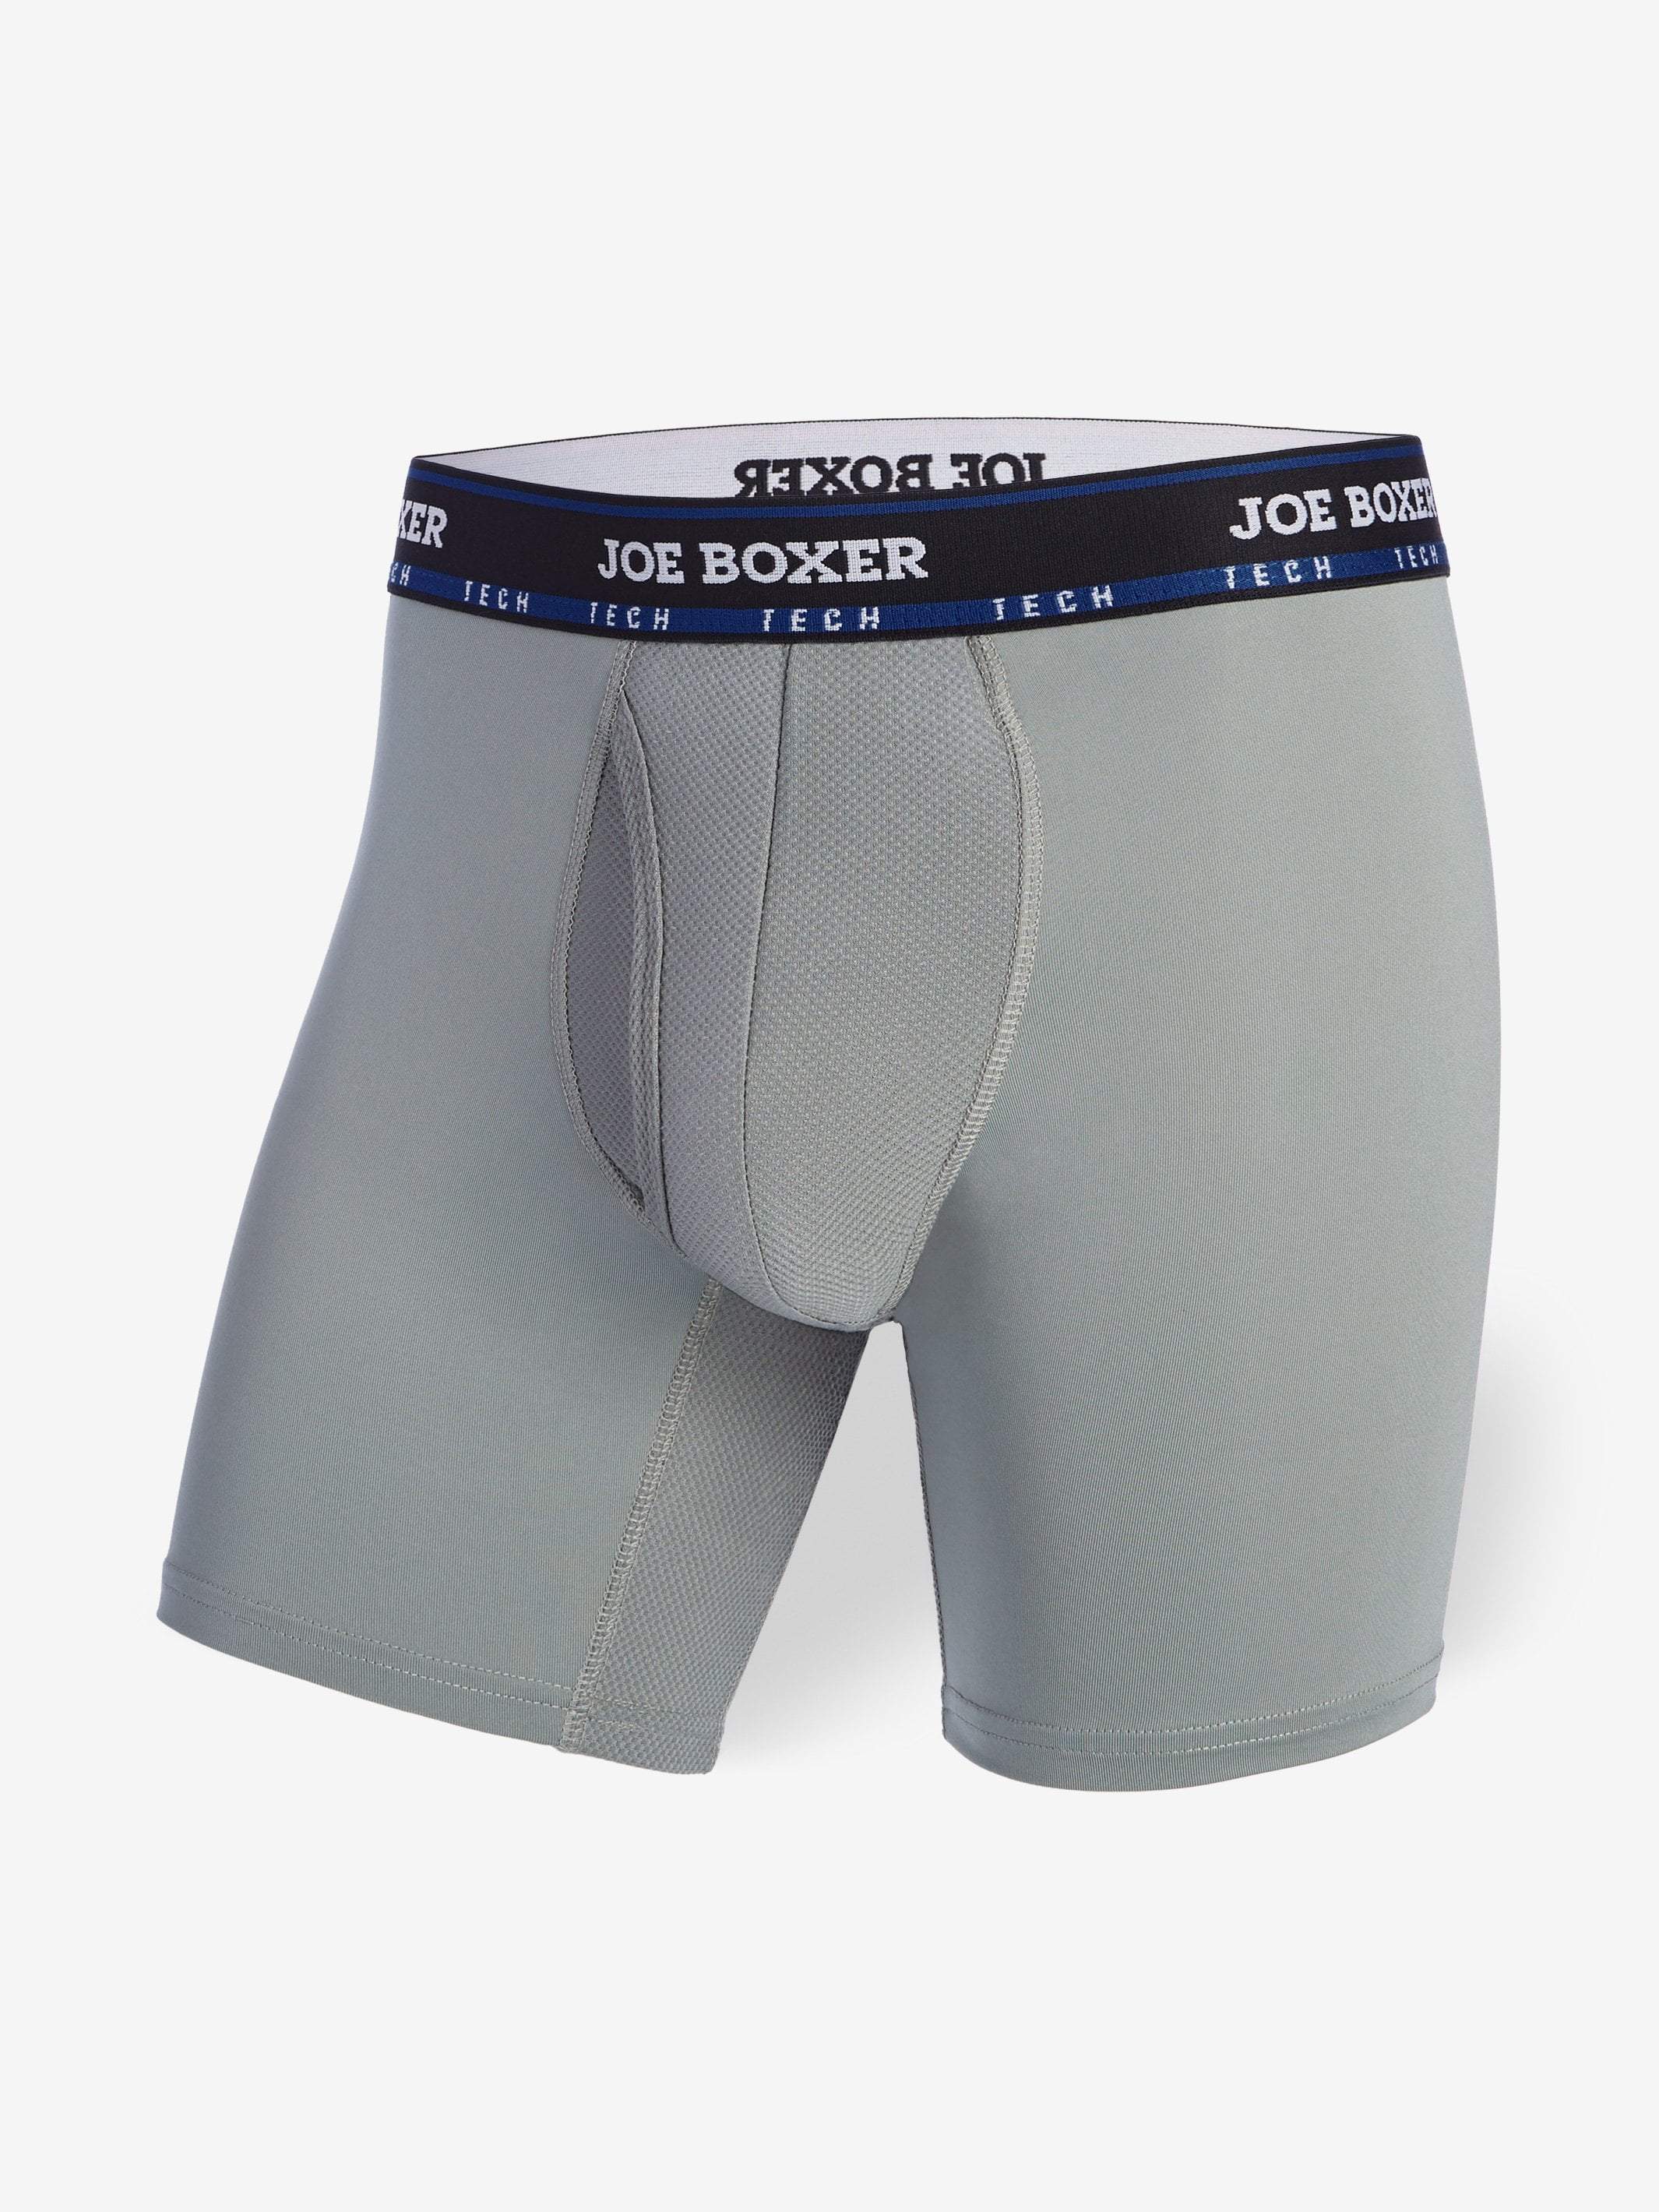 Shop Men's Underwear - Men's Boxer Briefs